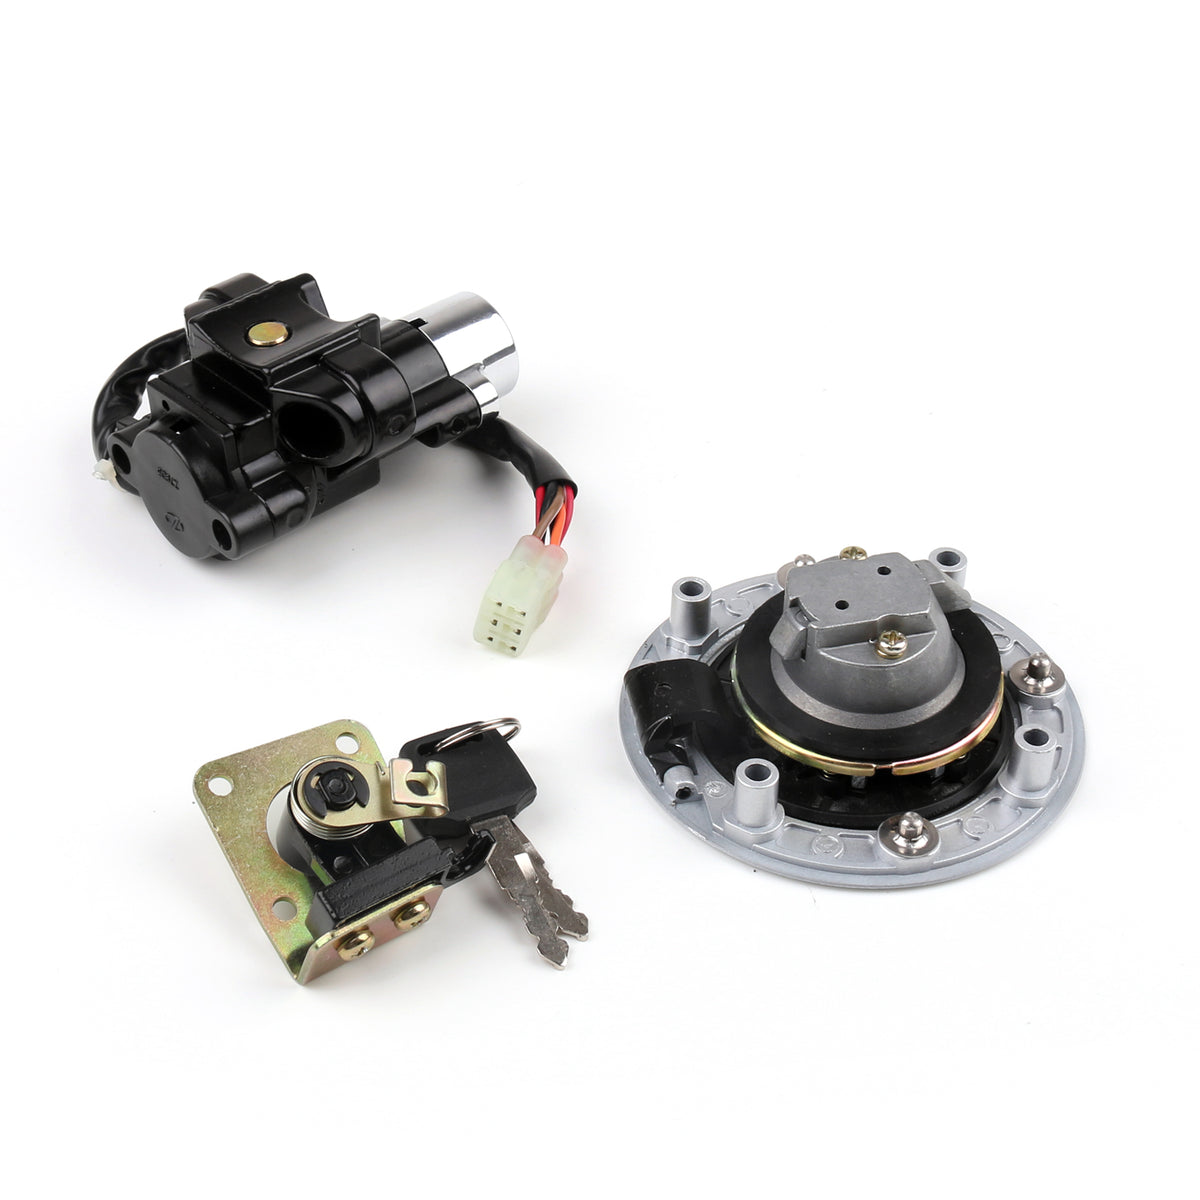 Ignition Switch Fuel Cap Lock Set Key for Suzuki Katana GSX600F GSX750F 98-06